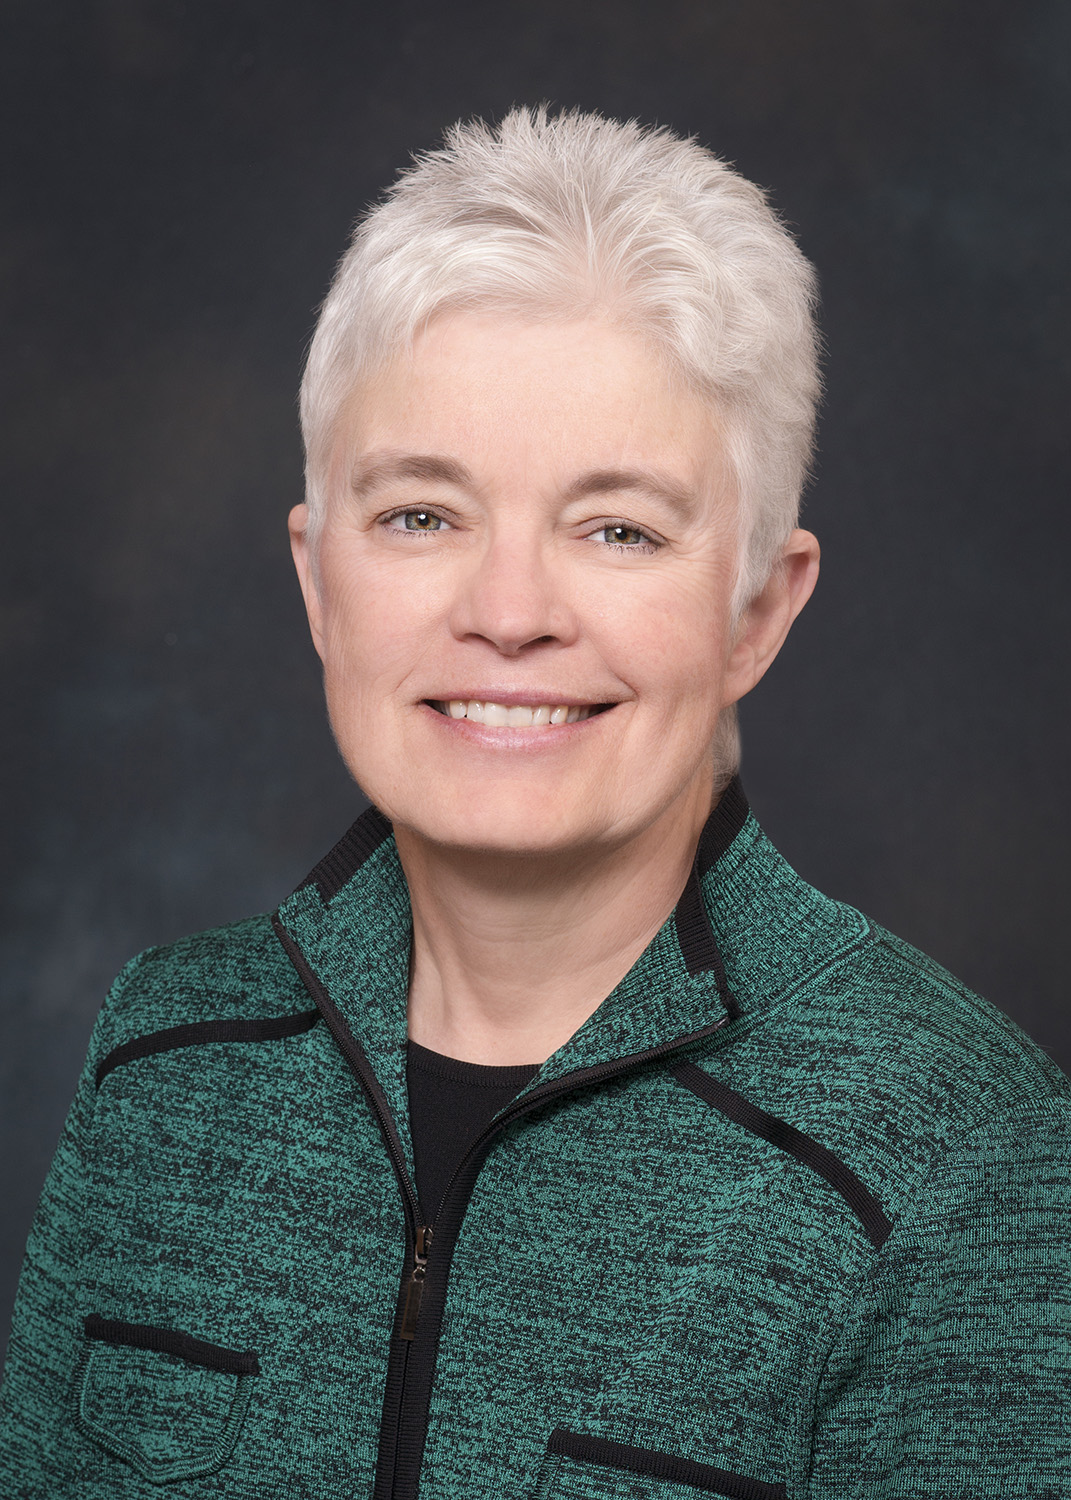 CEO of Saint Luke's Health System, Melinda Estes M.D.